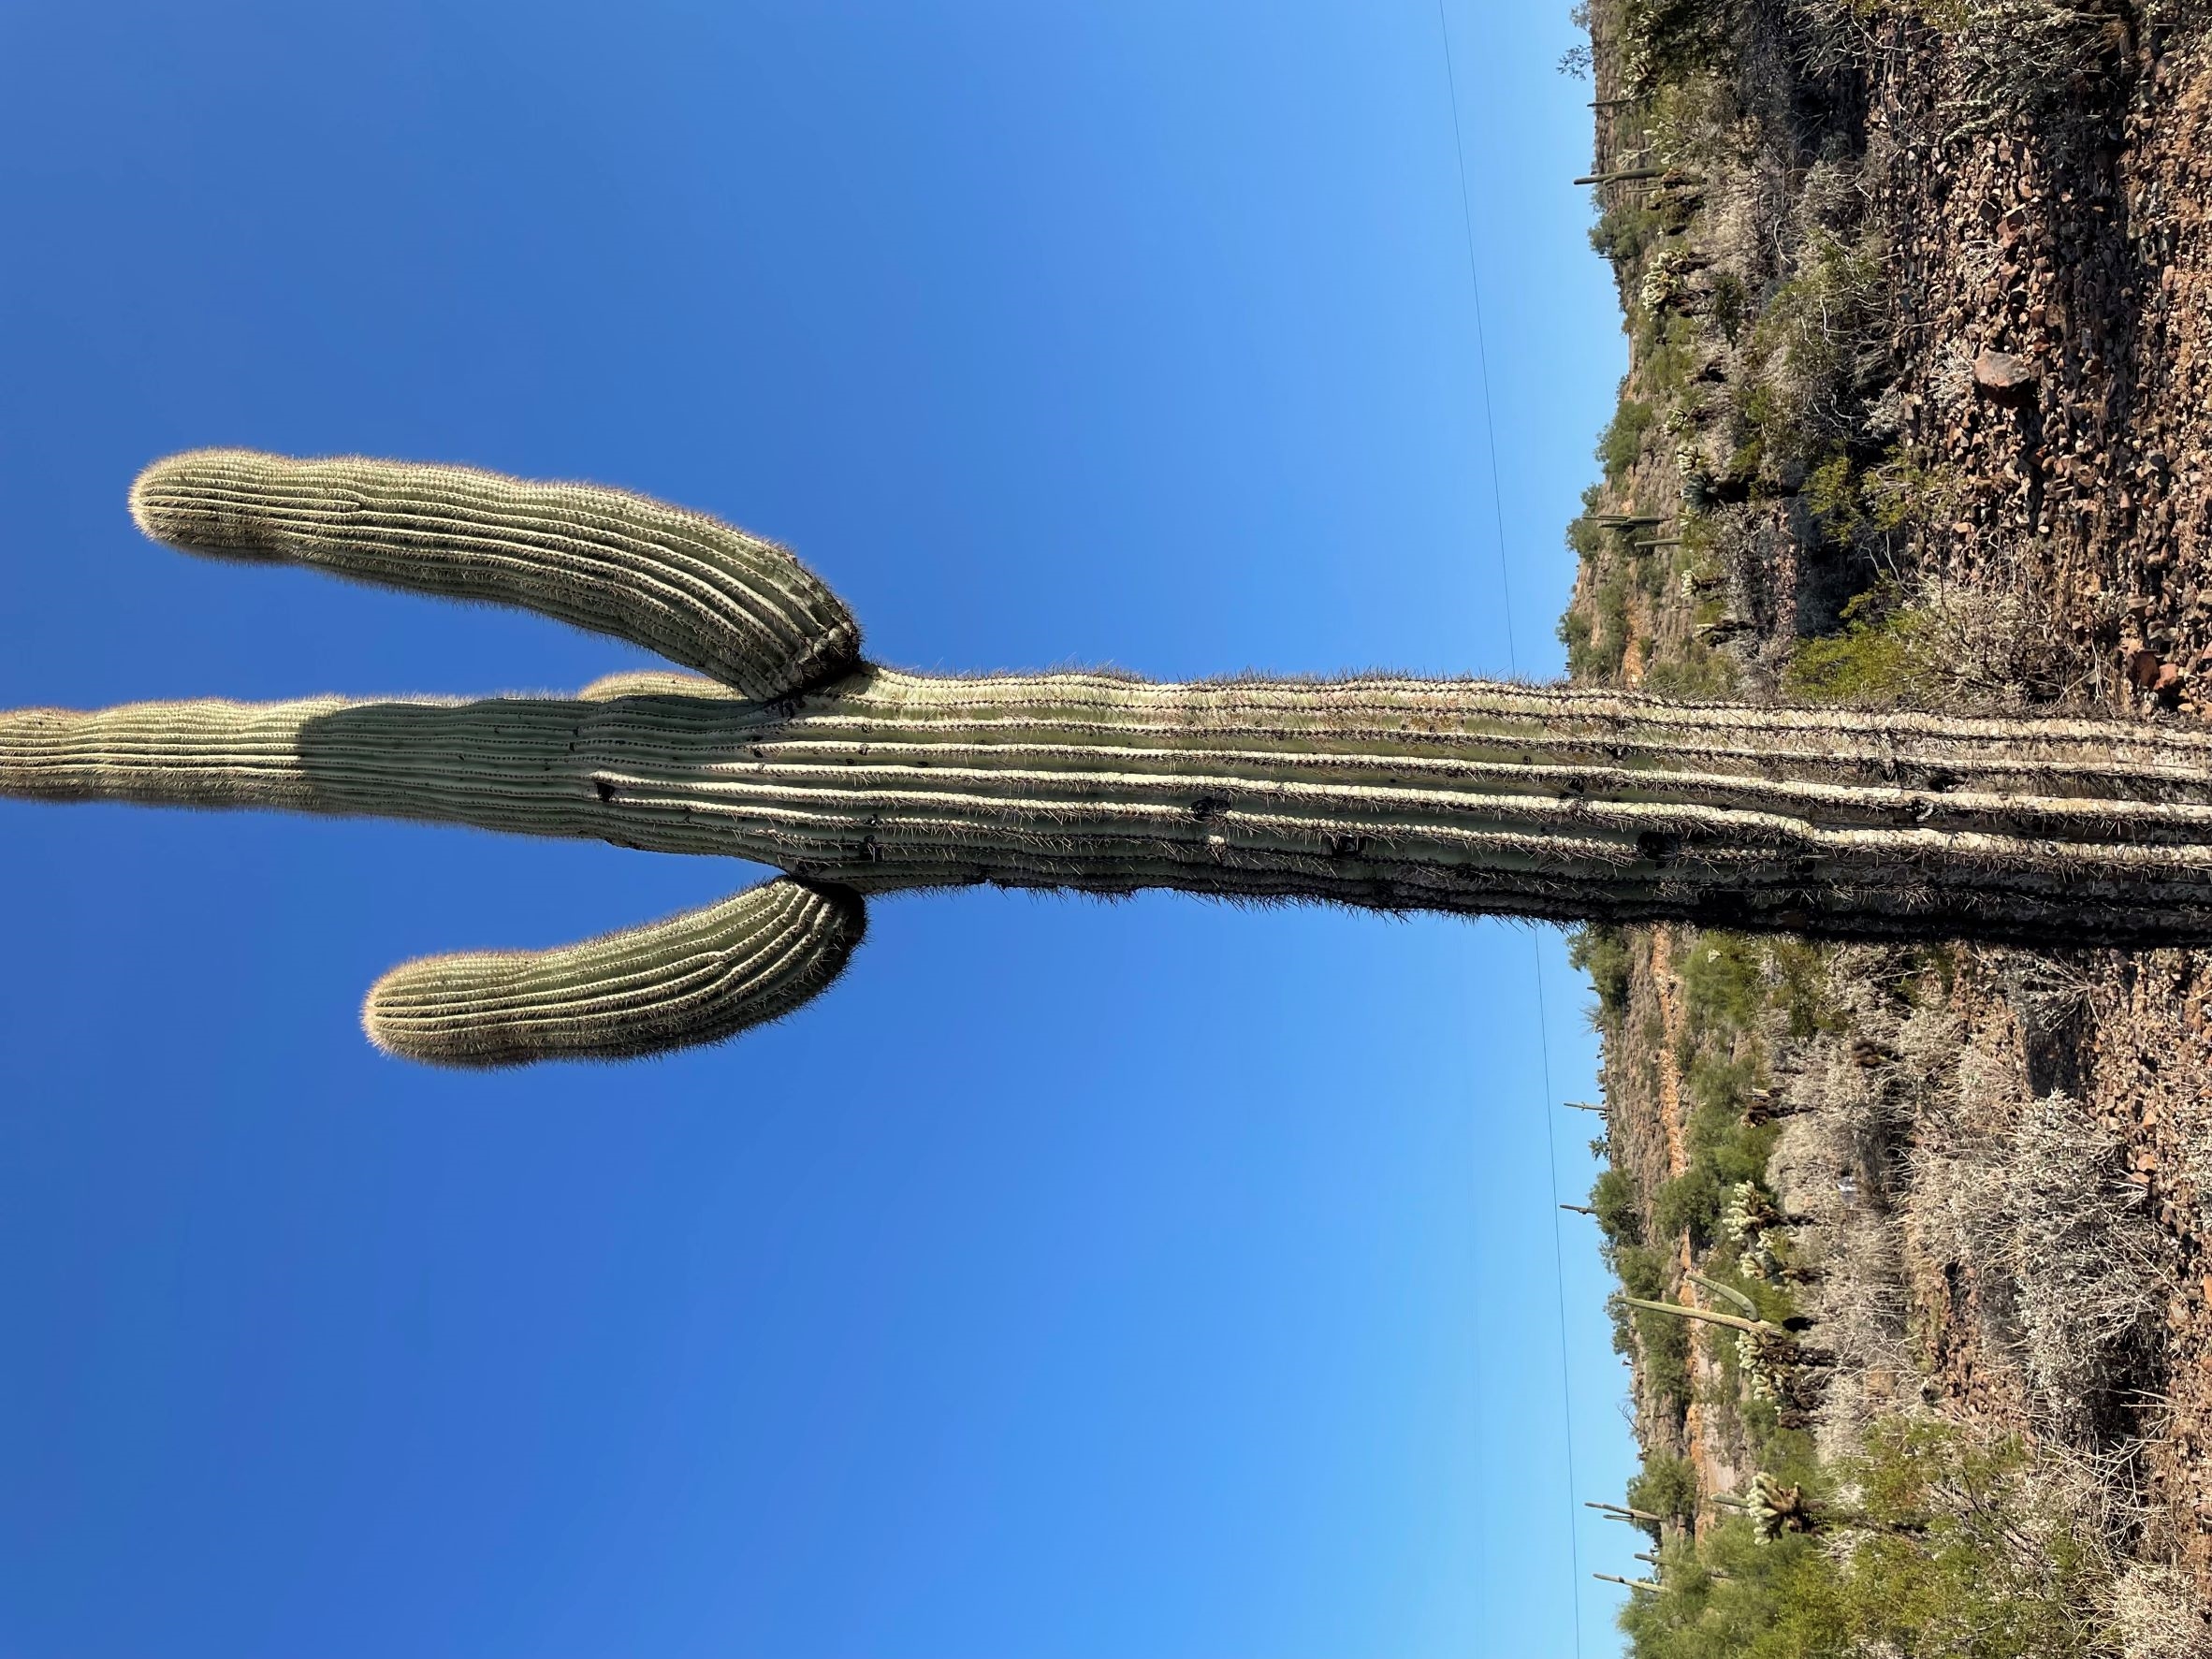 TRAVEL_PARKS22_Saguaro Cactus